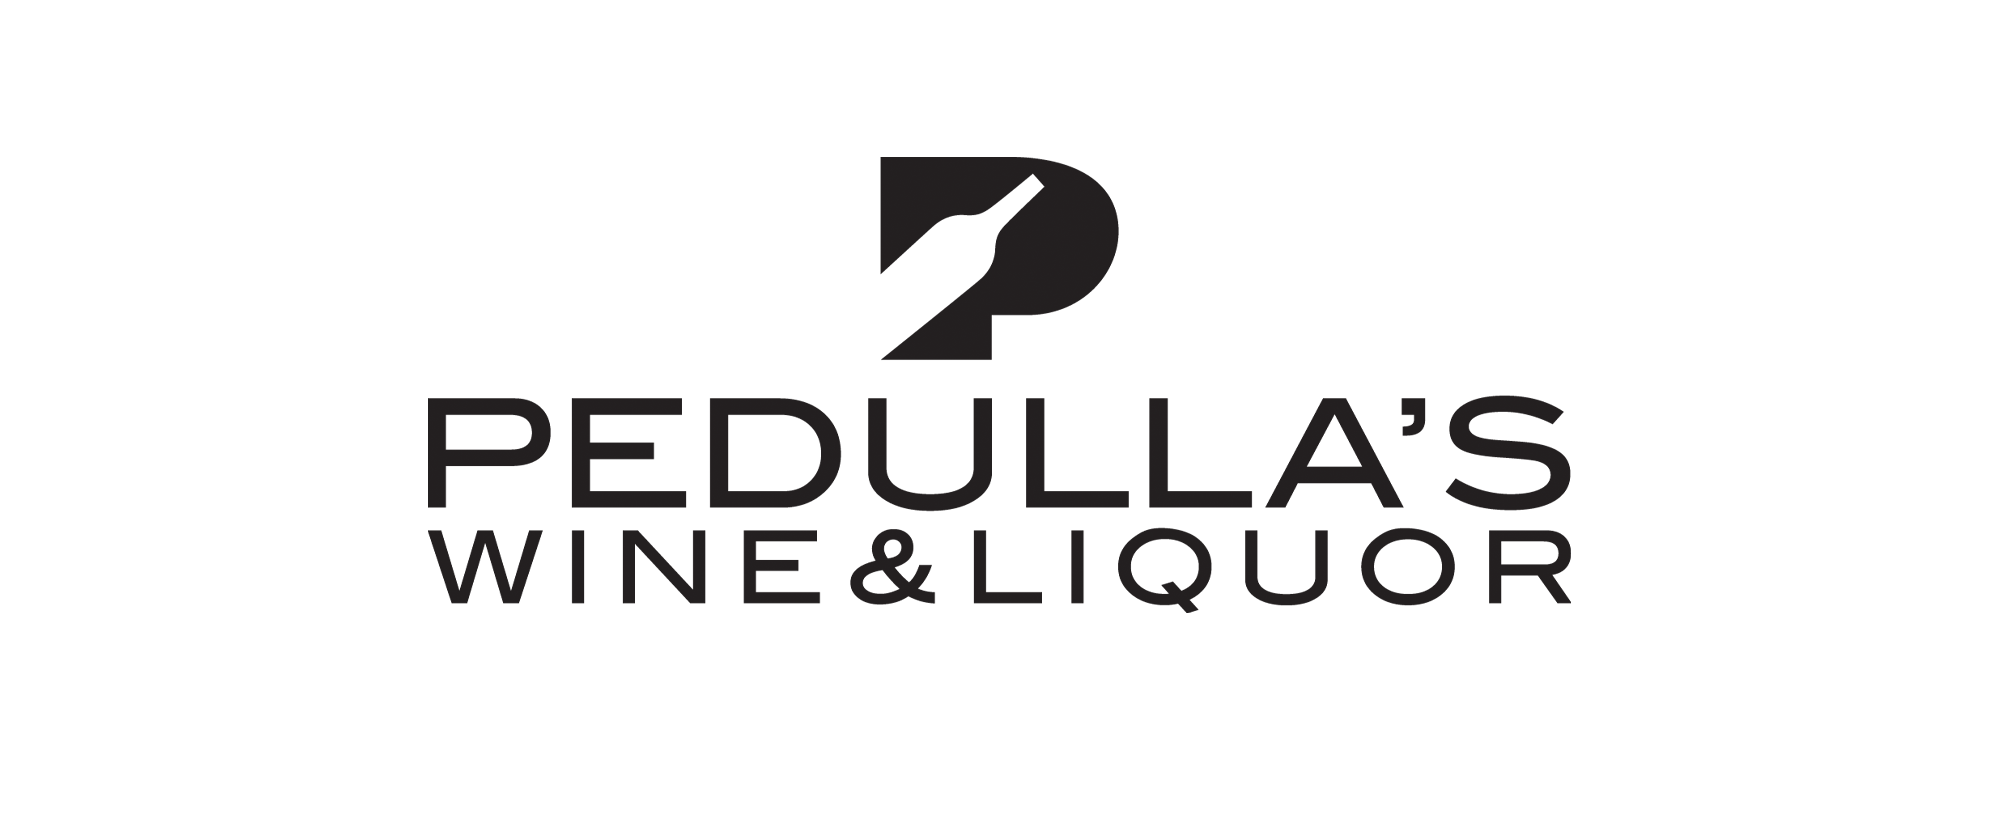 Pedullas Logo Vertical Black 1